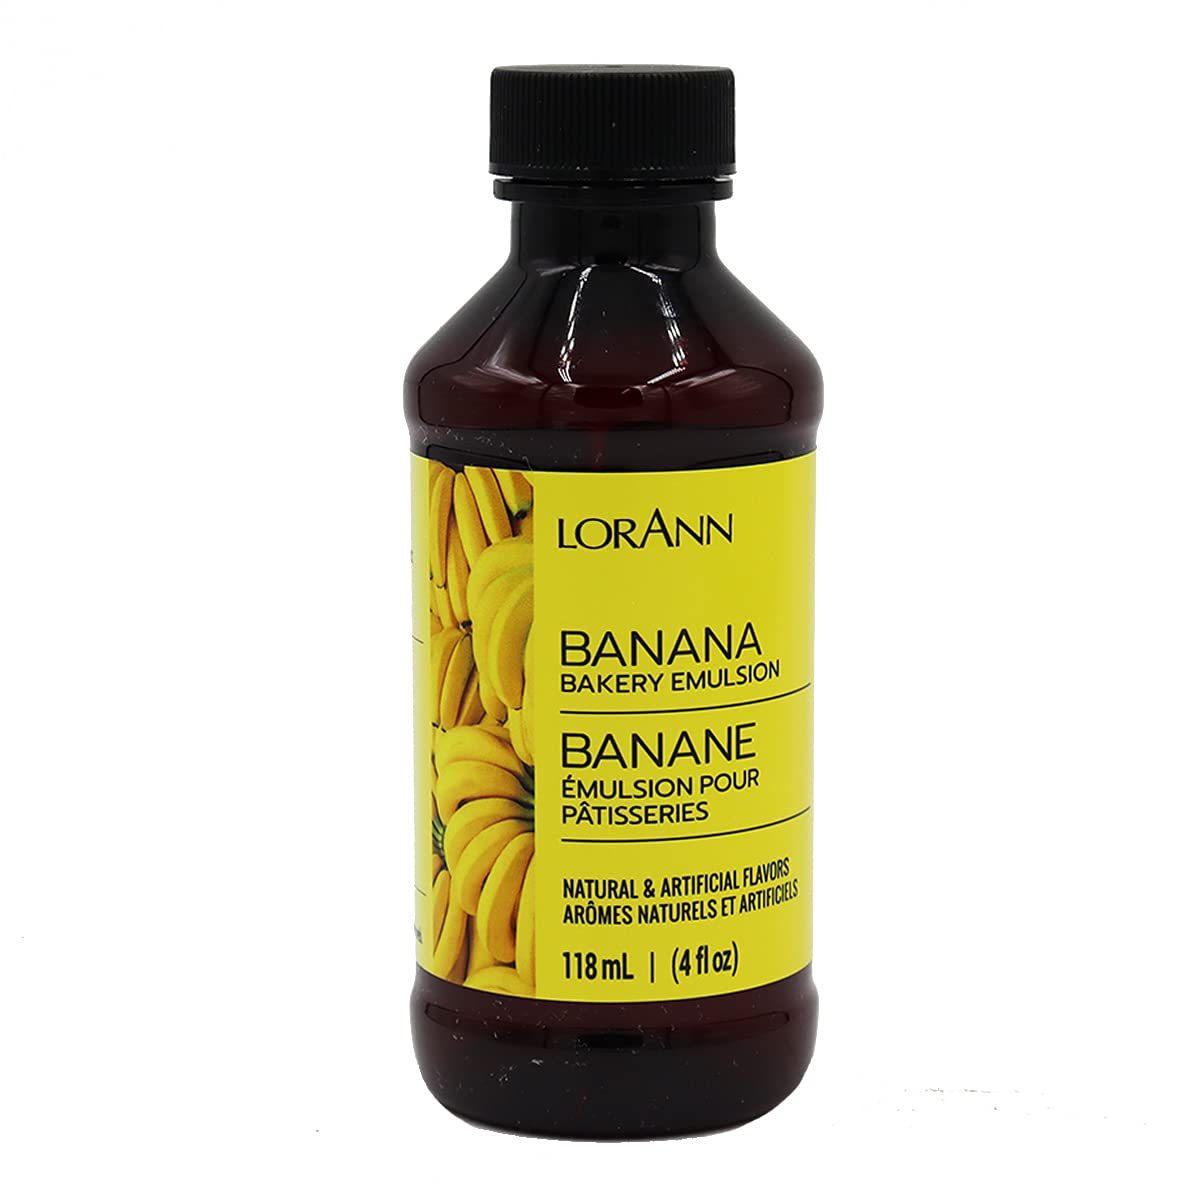 LorAnn Baking Emulsion 4oz - Banana